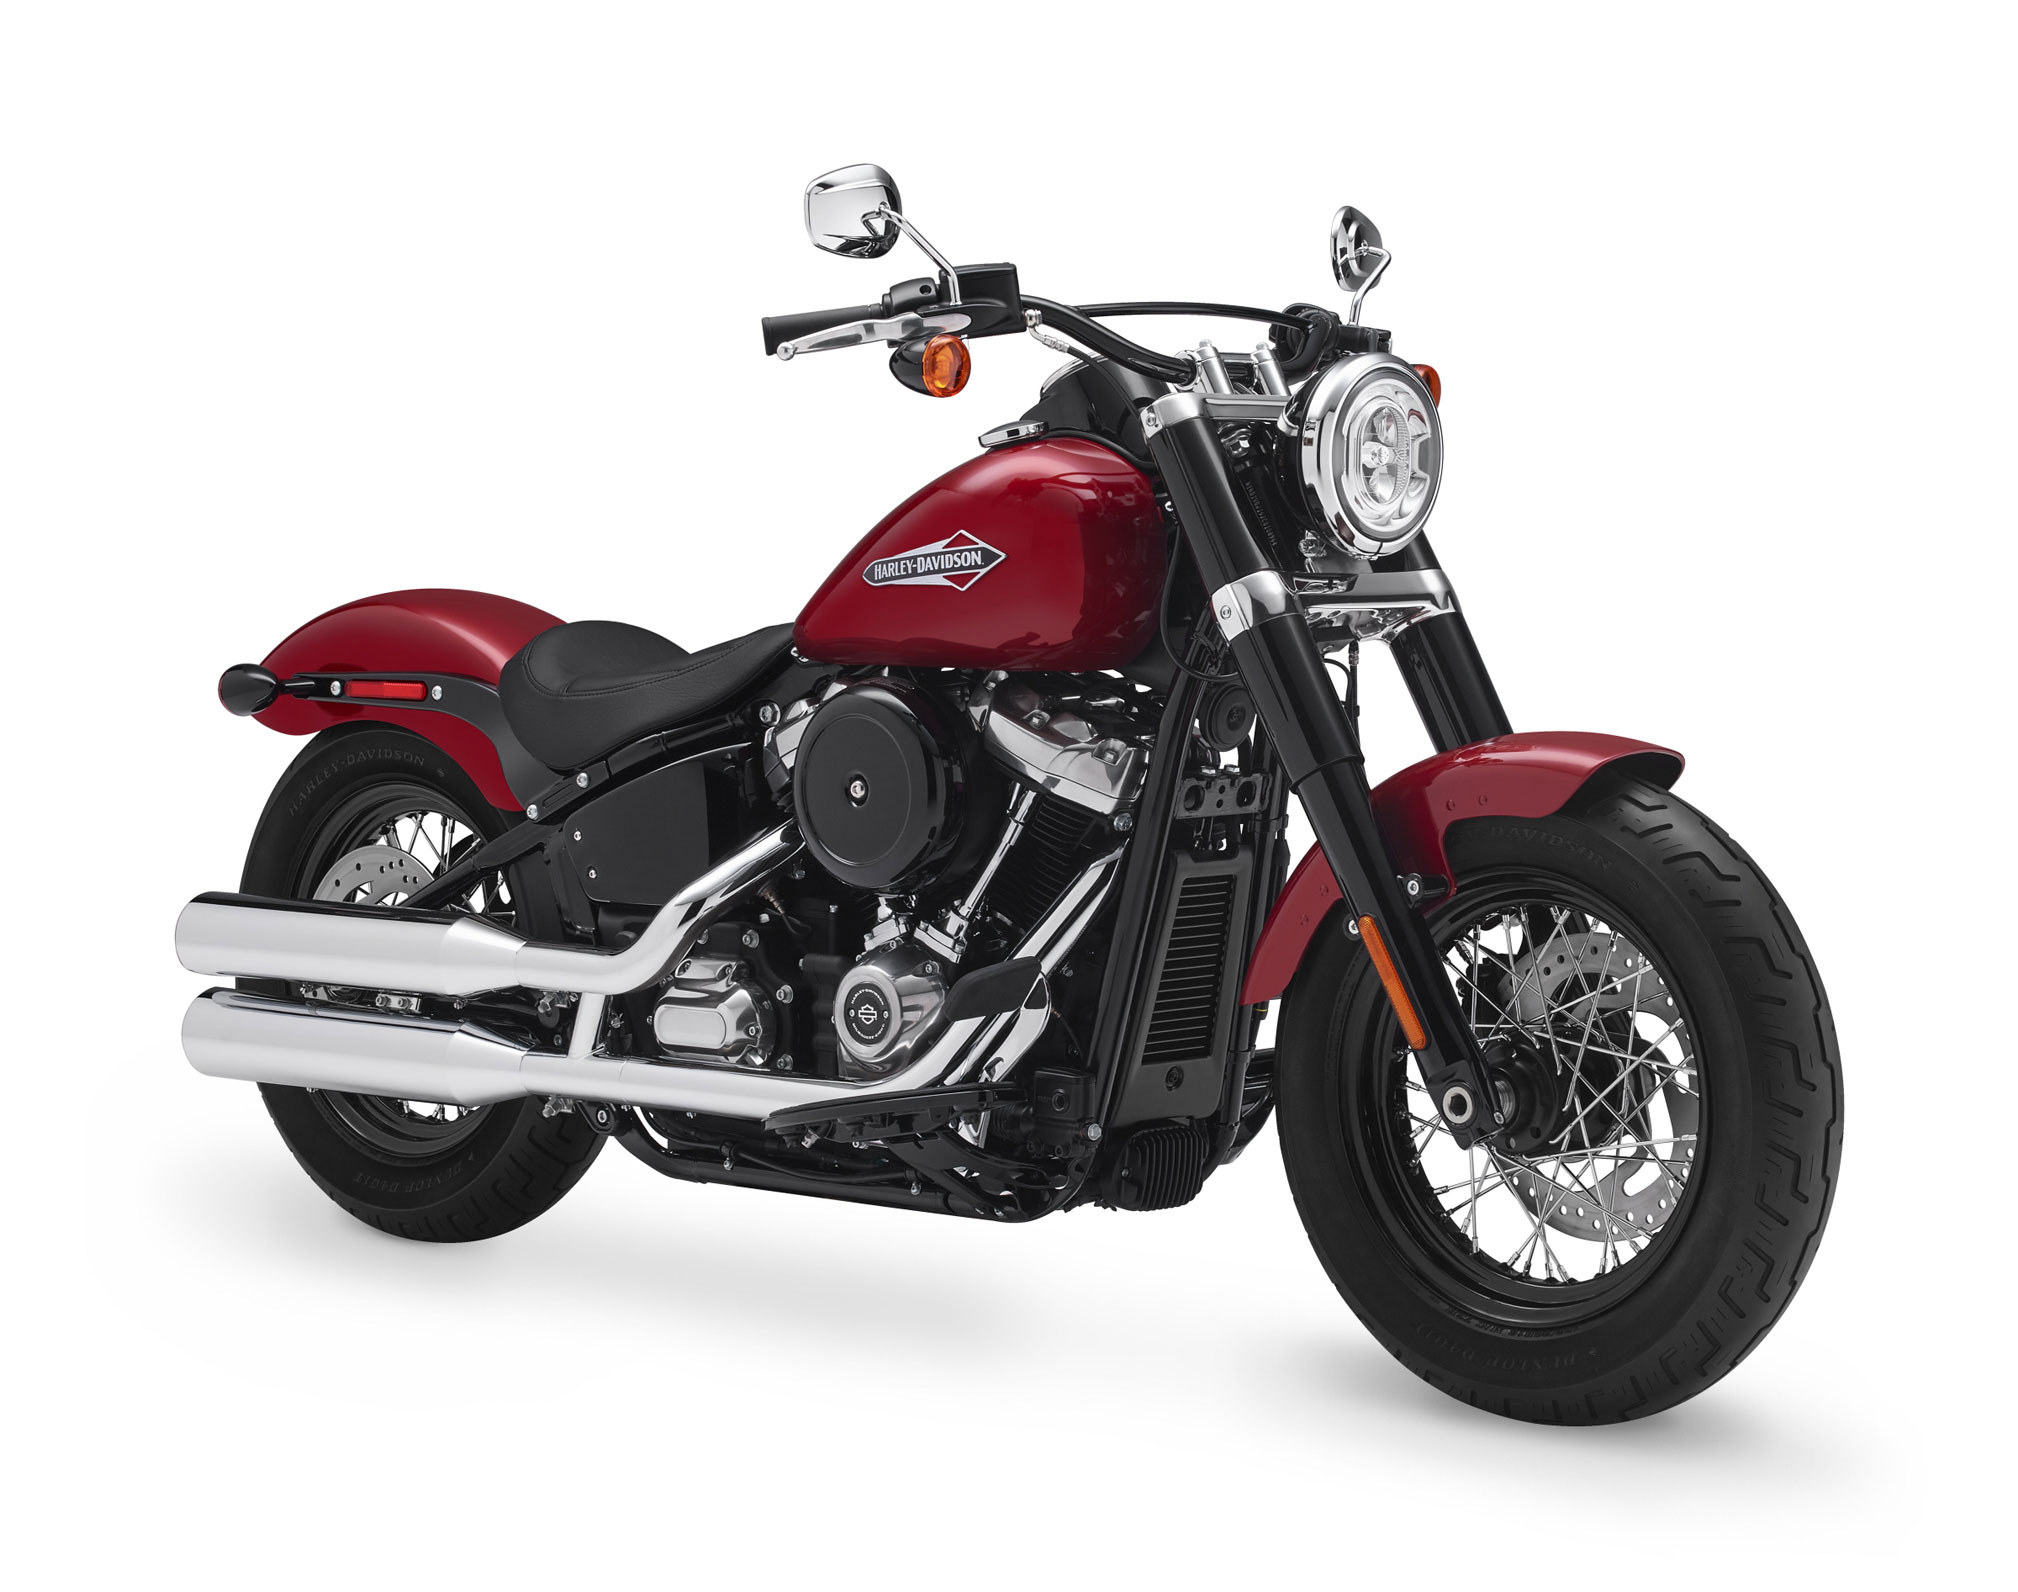 2018 Harley Davidson Softail Slim Review Total Motorcycle